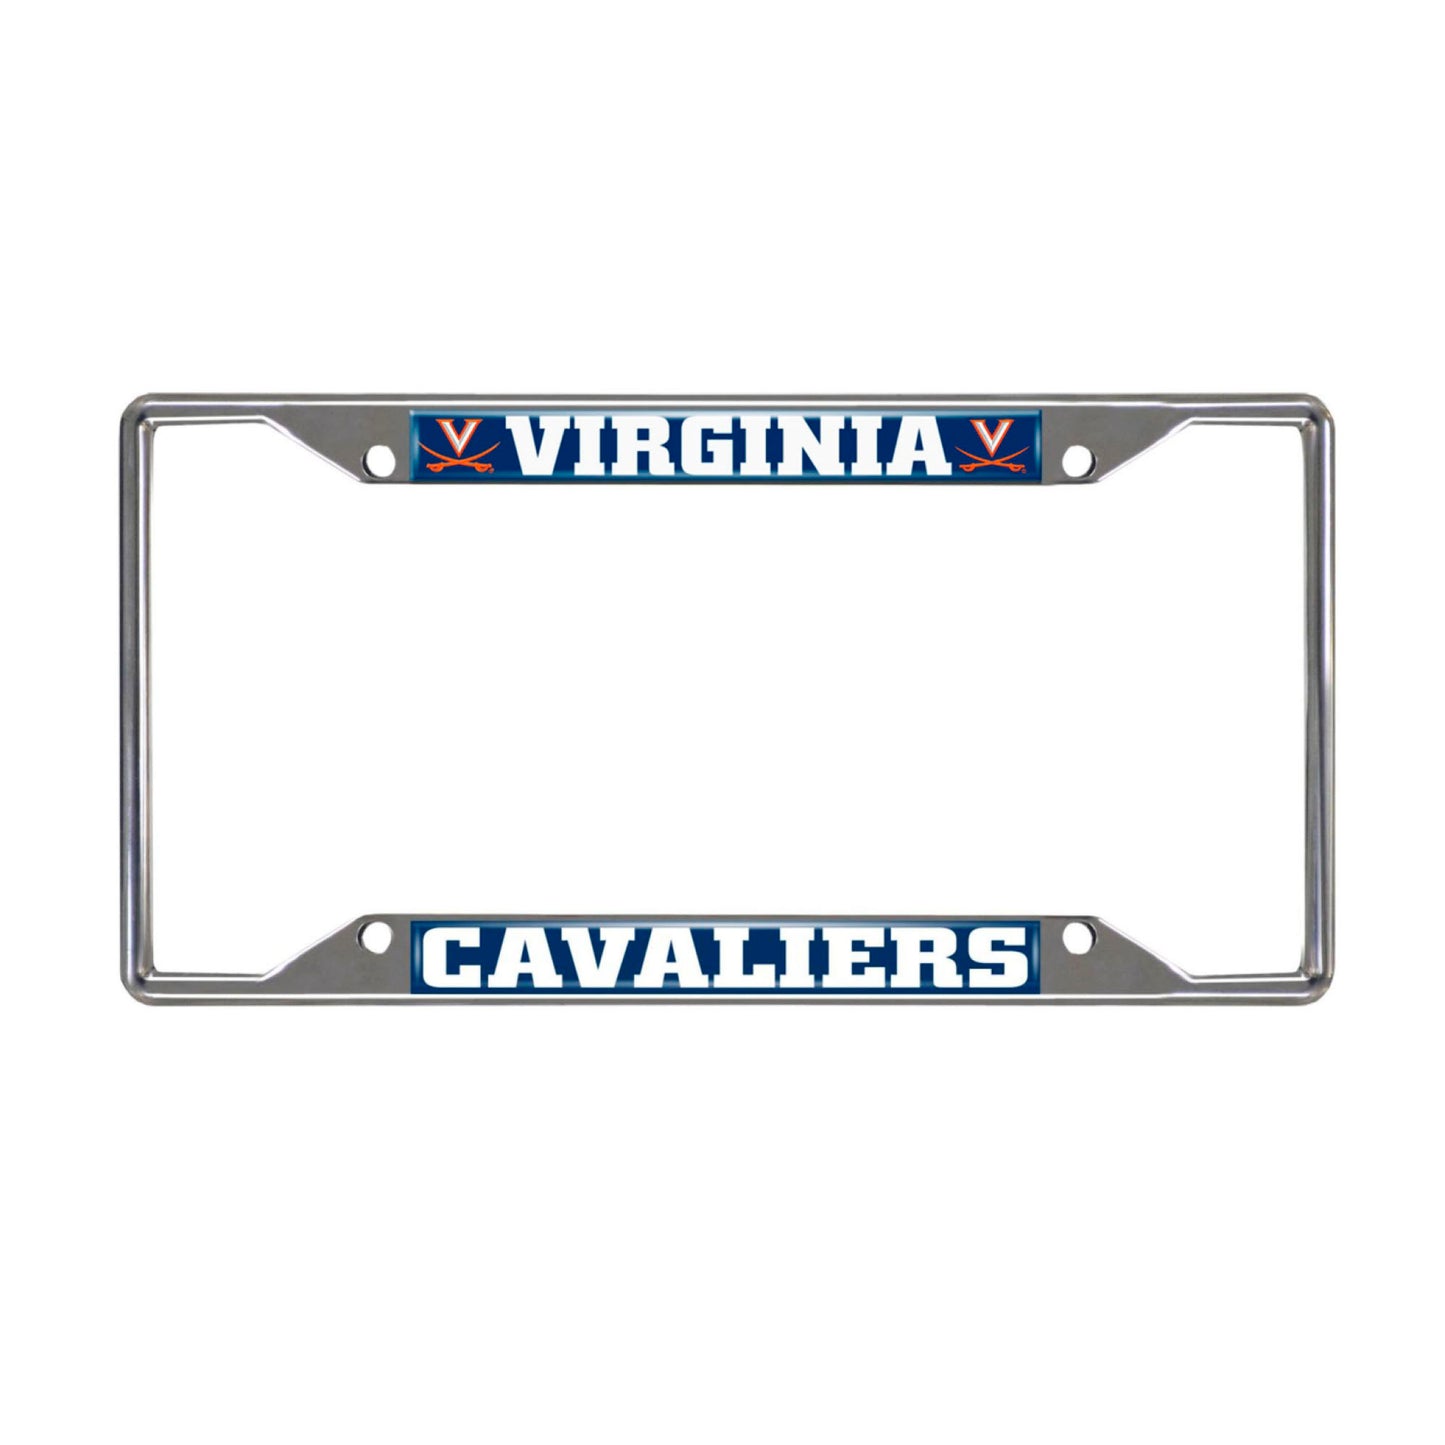 Virginia Cavaliers Chrome Metal License Plate Frame, 6.25in x 12.25in